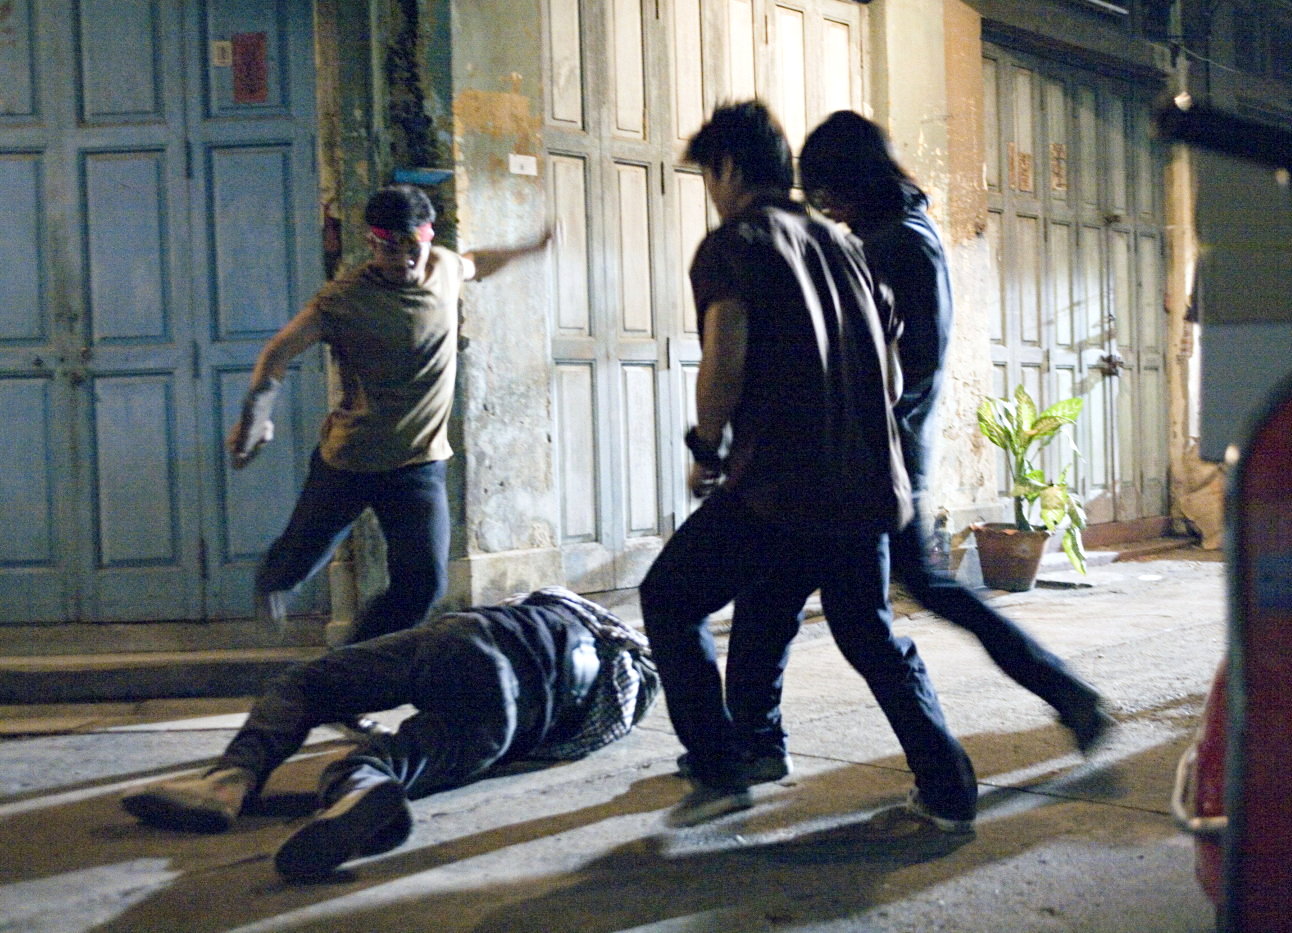 A scene from Lions Gate Films' Bangkok Dangerous (2008)